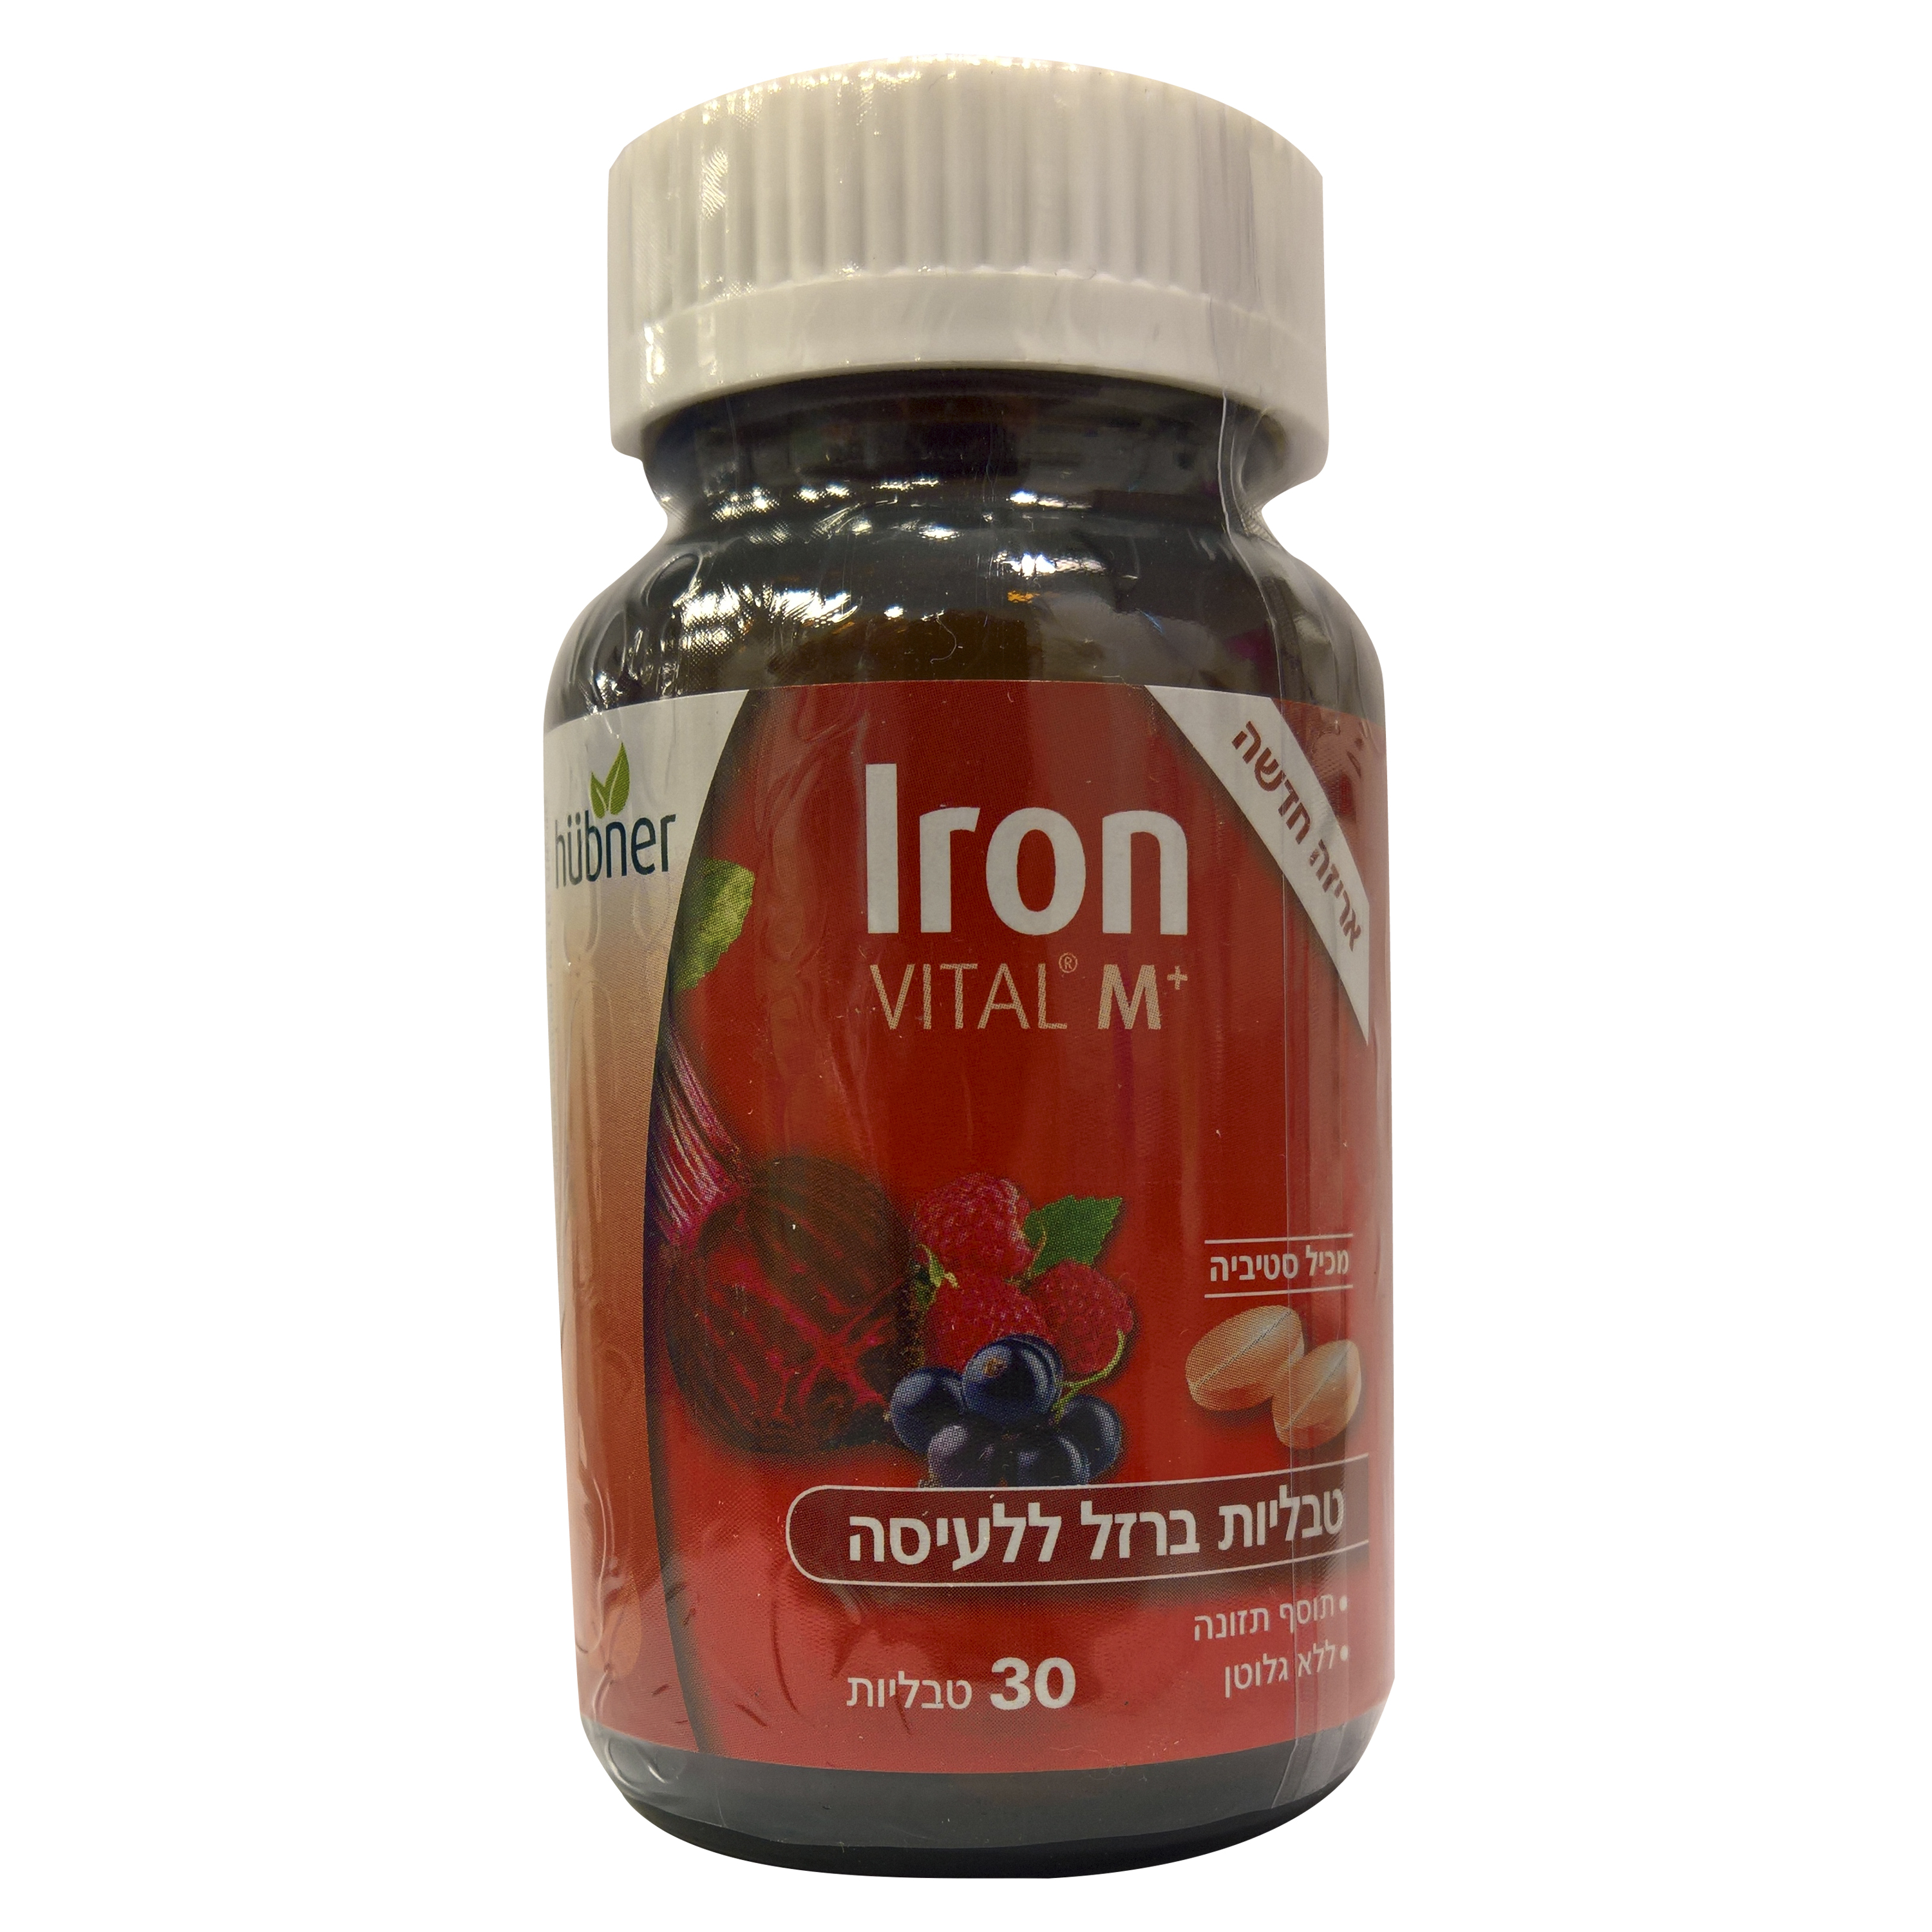 Iron vitamin. Железо витамины. Витамины Iron железо. Минерально витаминный комплекс с железом. Витамины с железом для женщин.